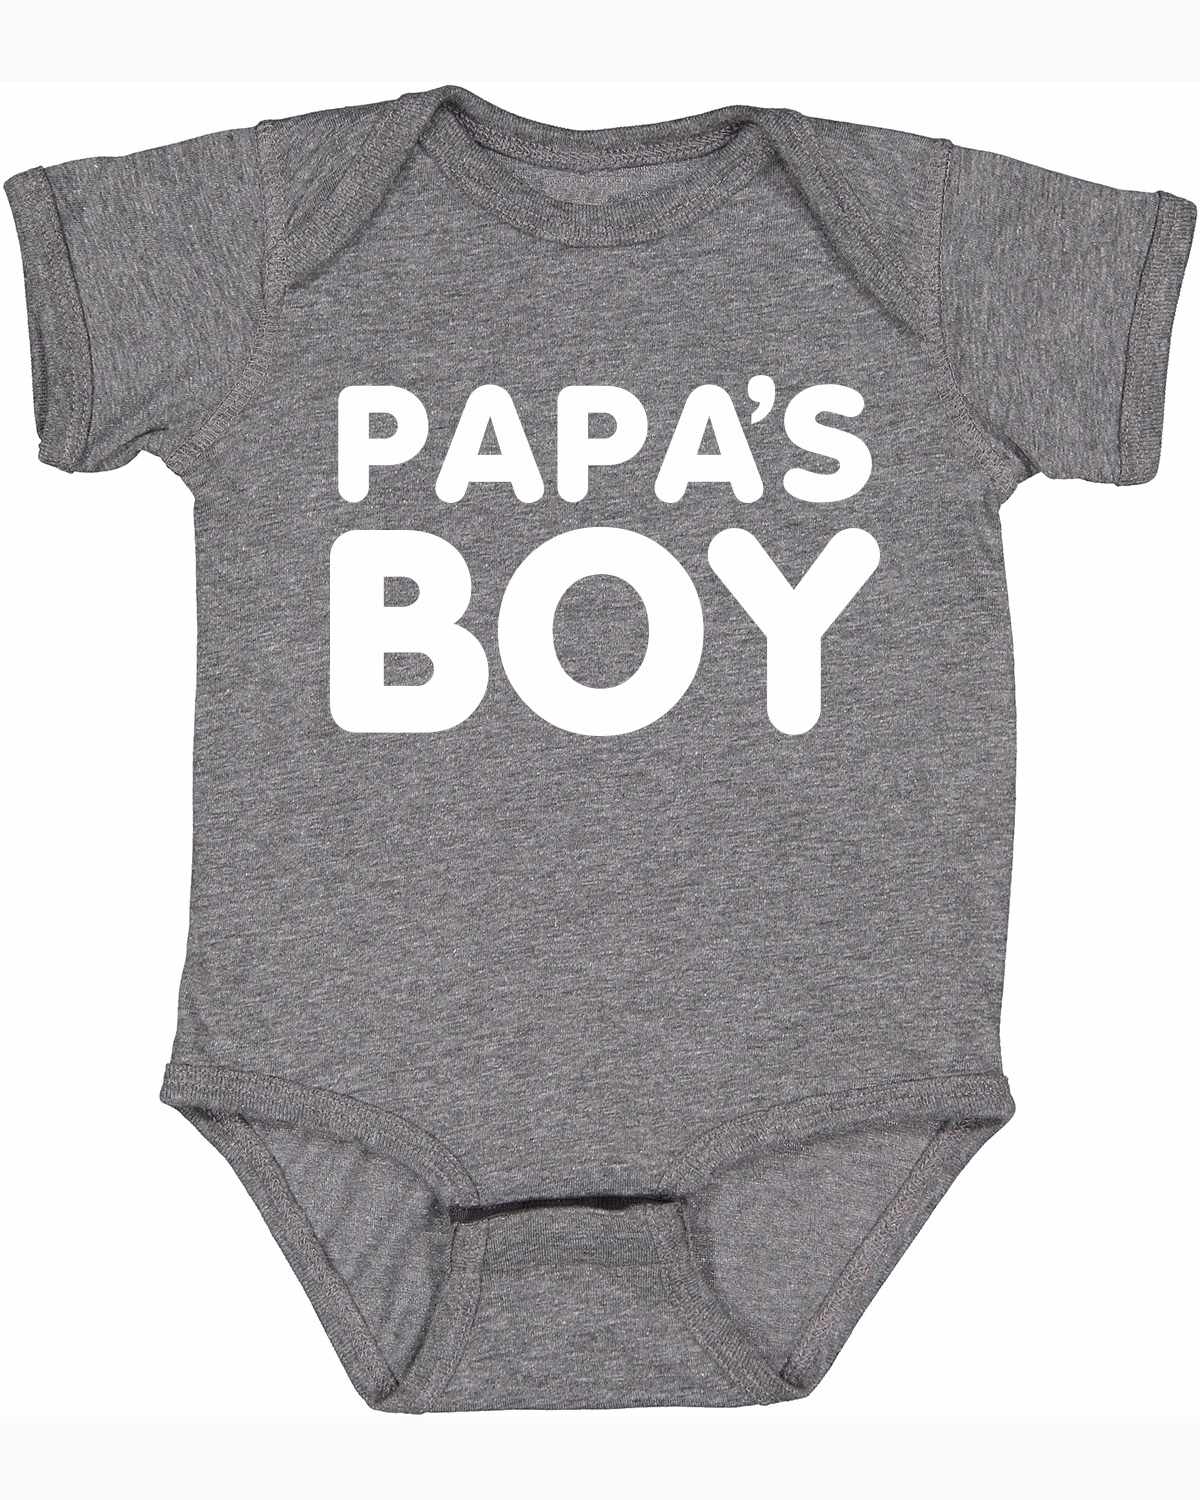 Papa's Boy on Infant BodySuit (#1217-10)